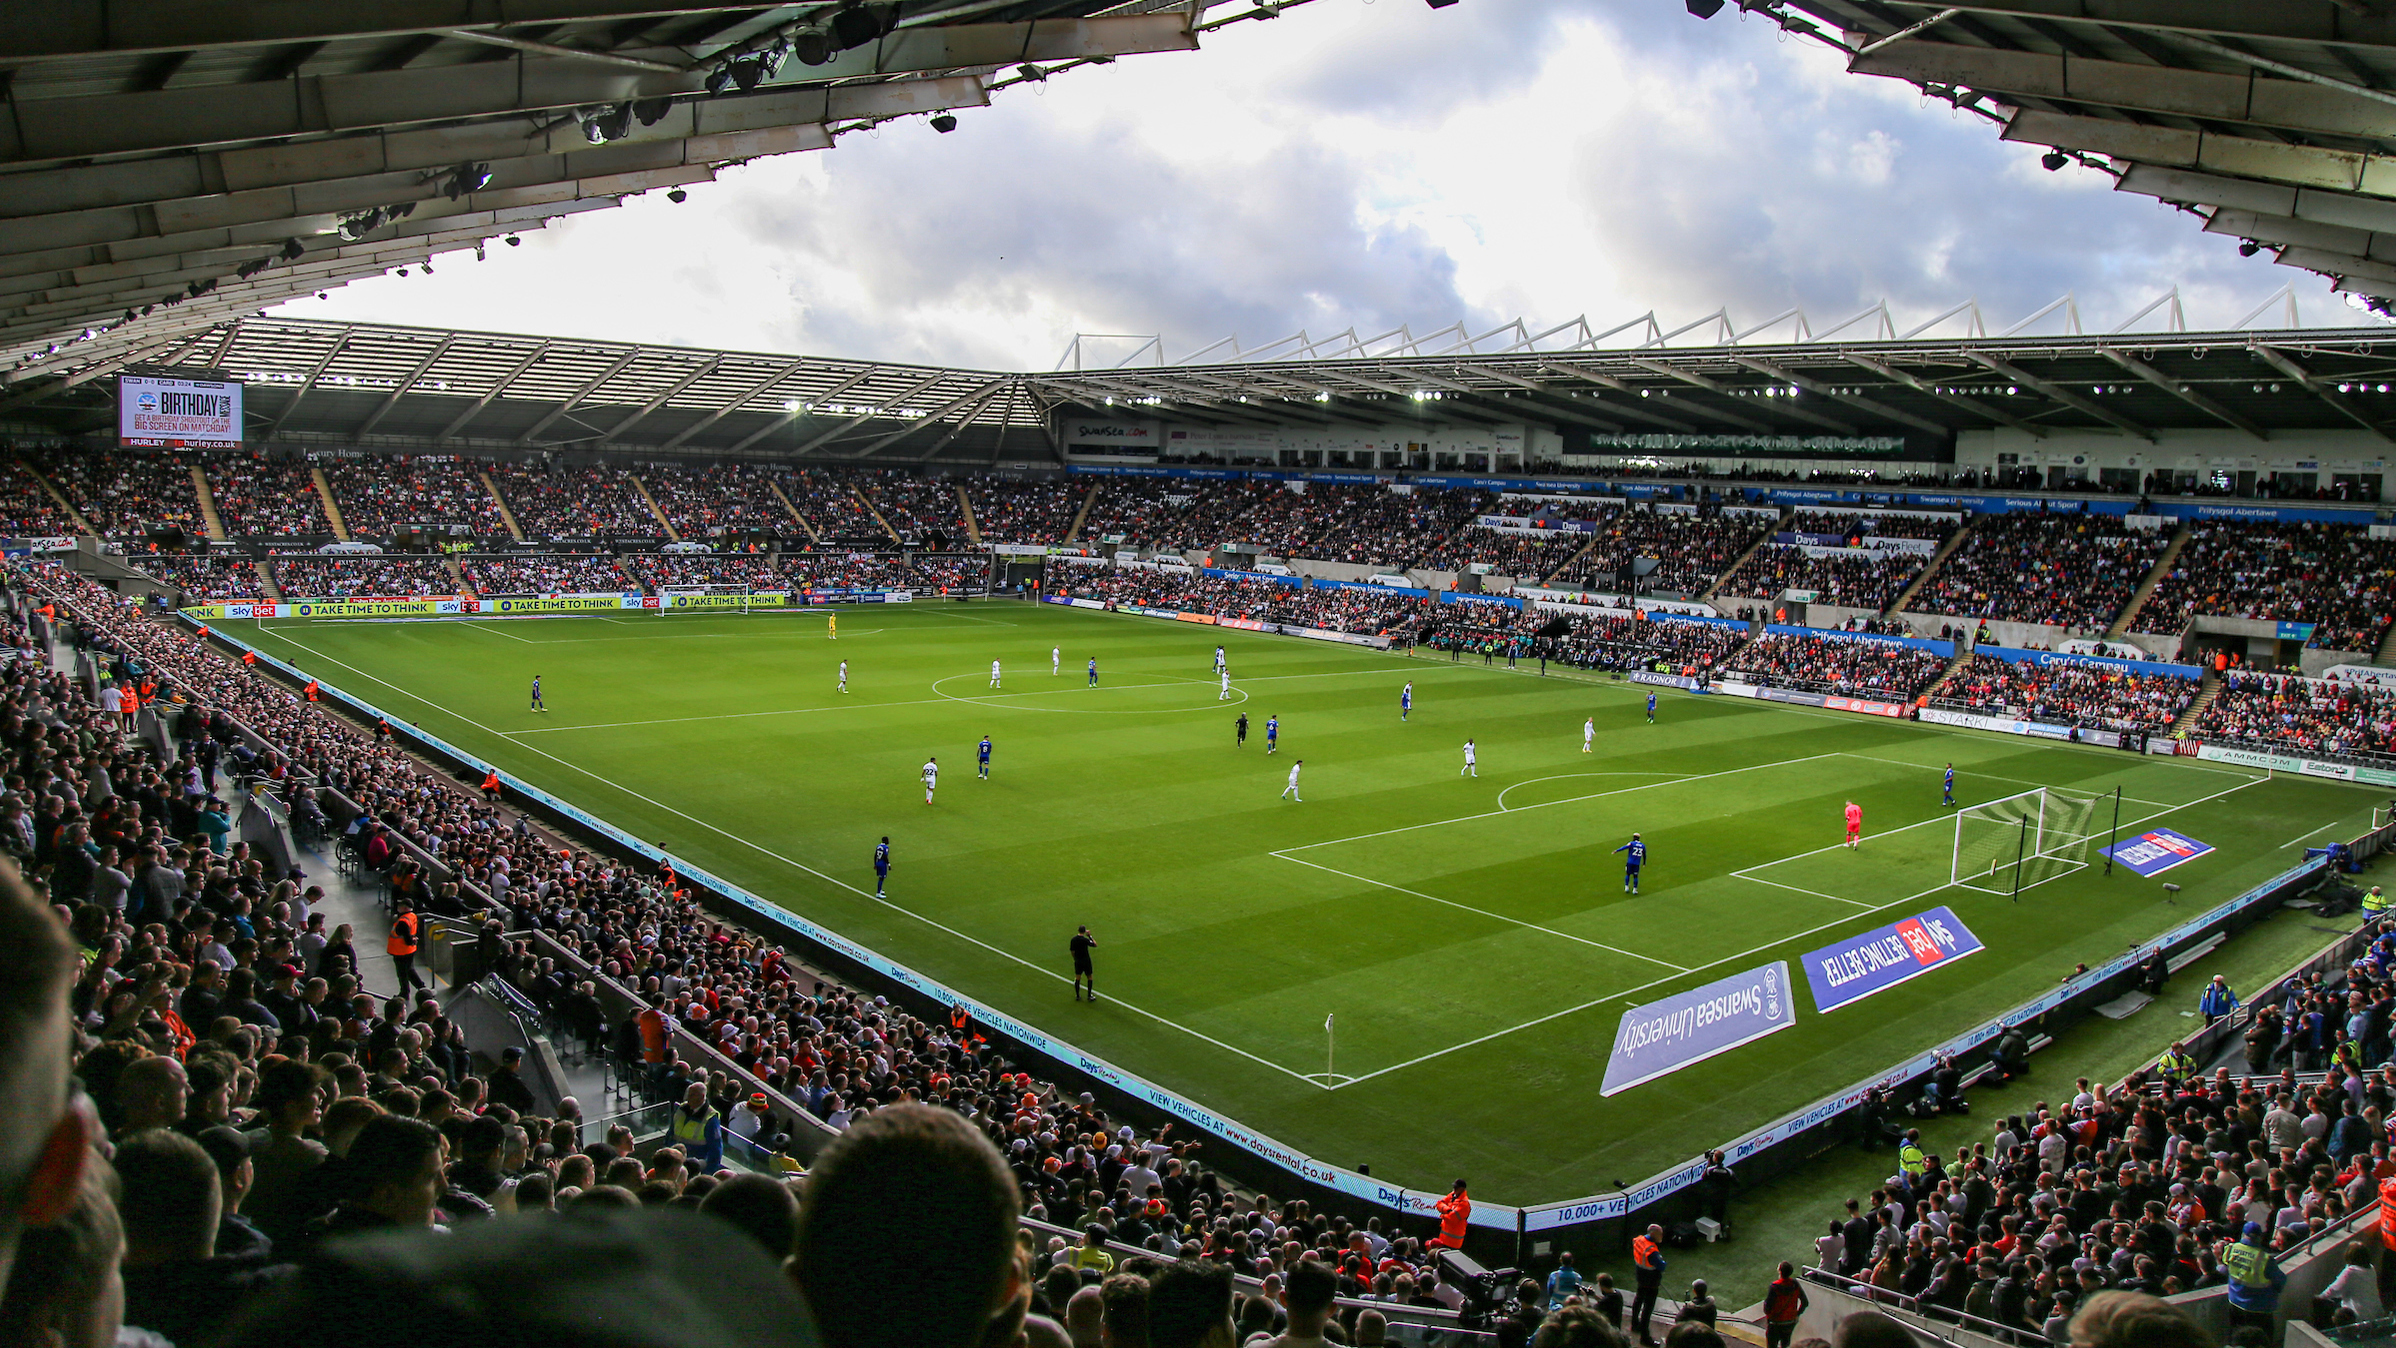 Swansea Cardiff stadium general view